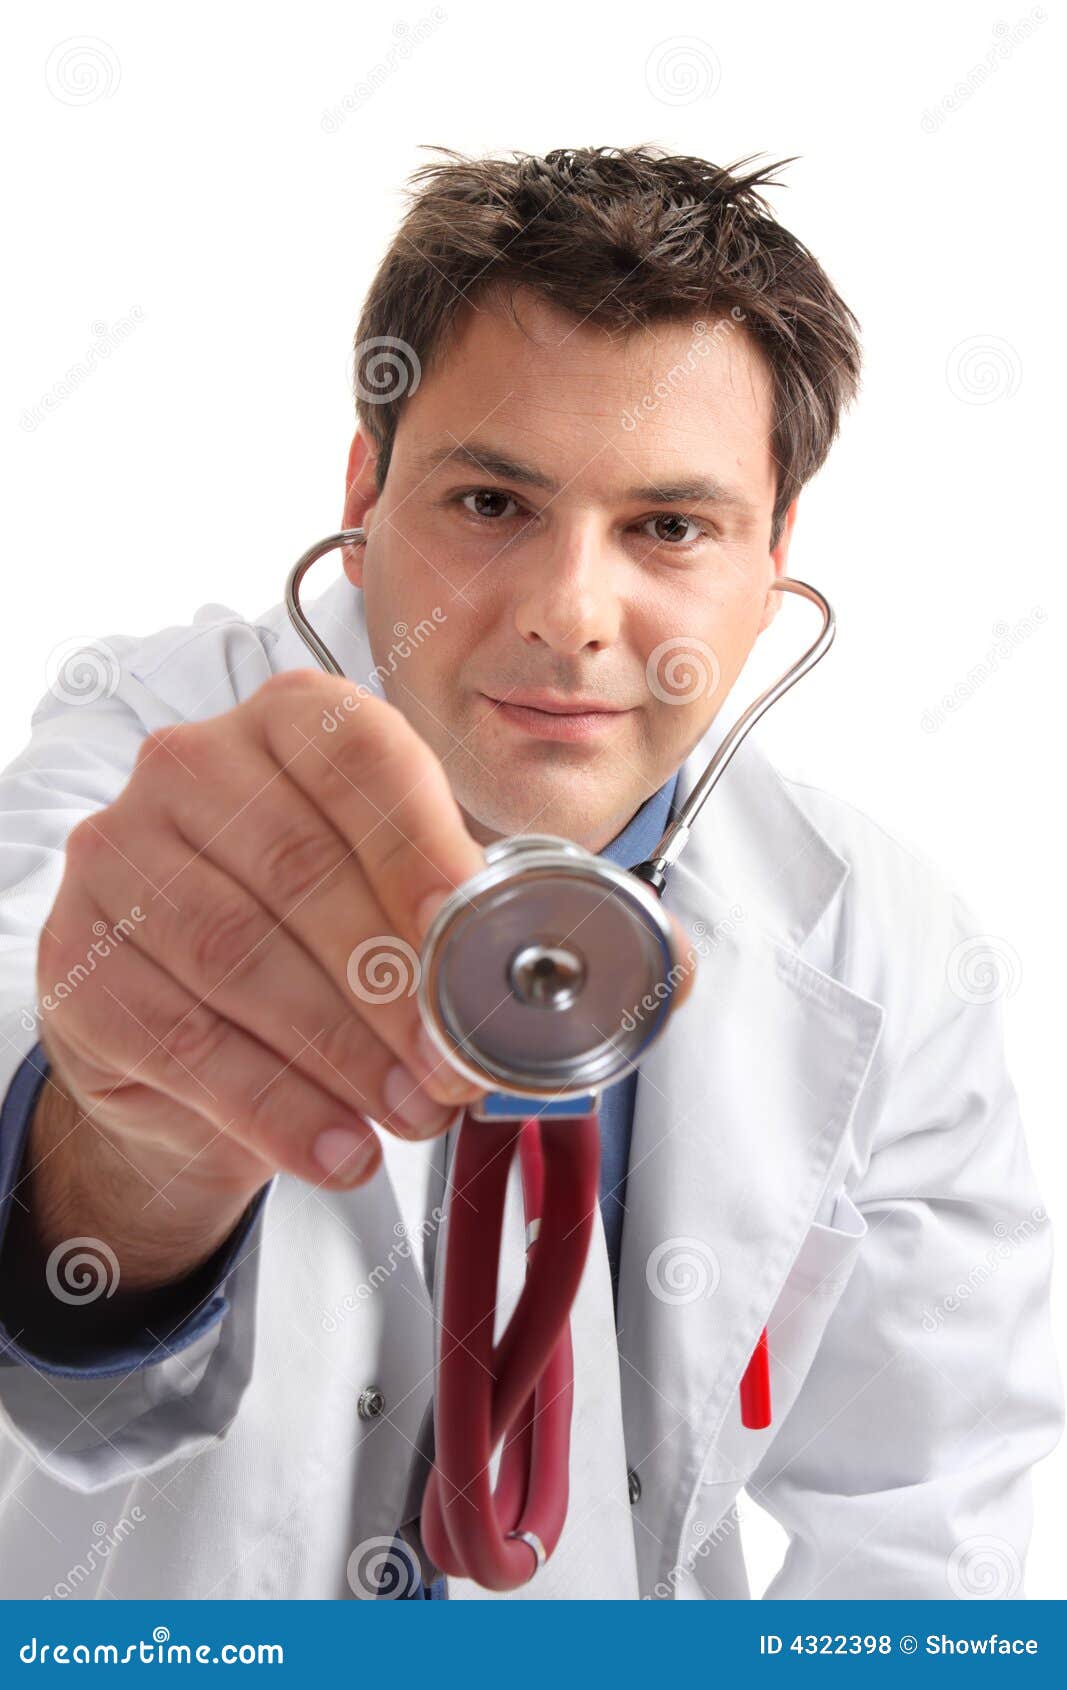 medical exam checkup - doctor